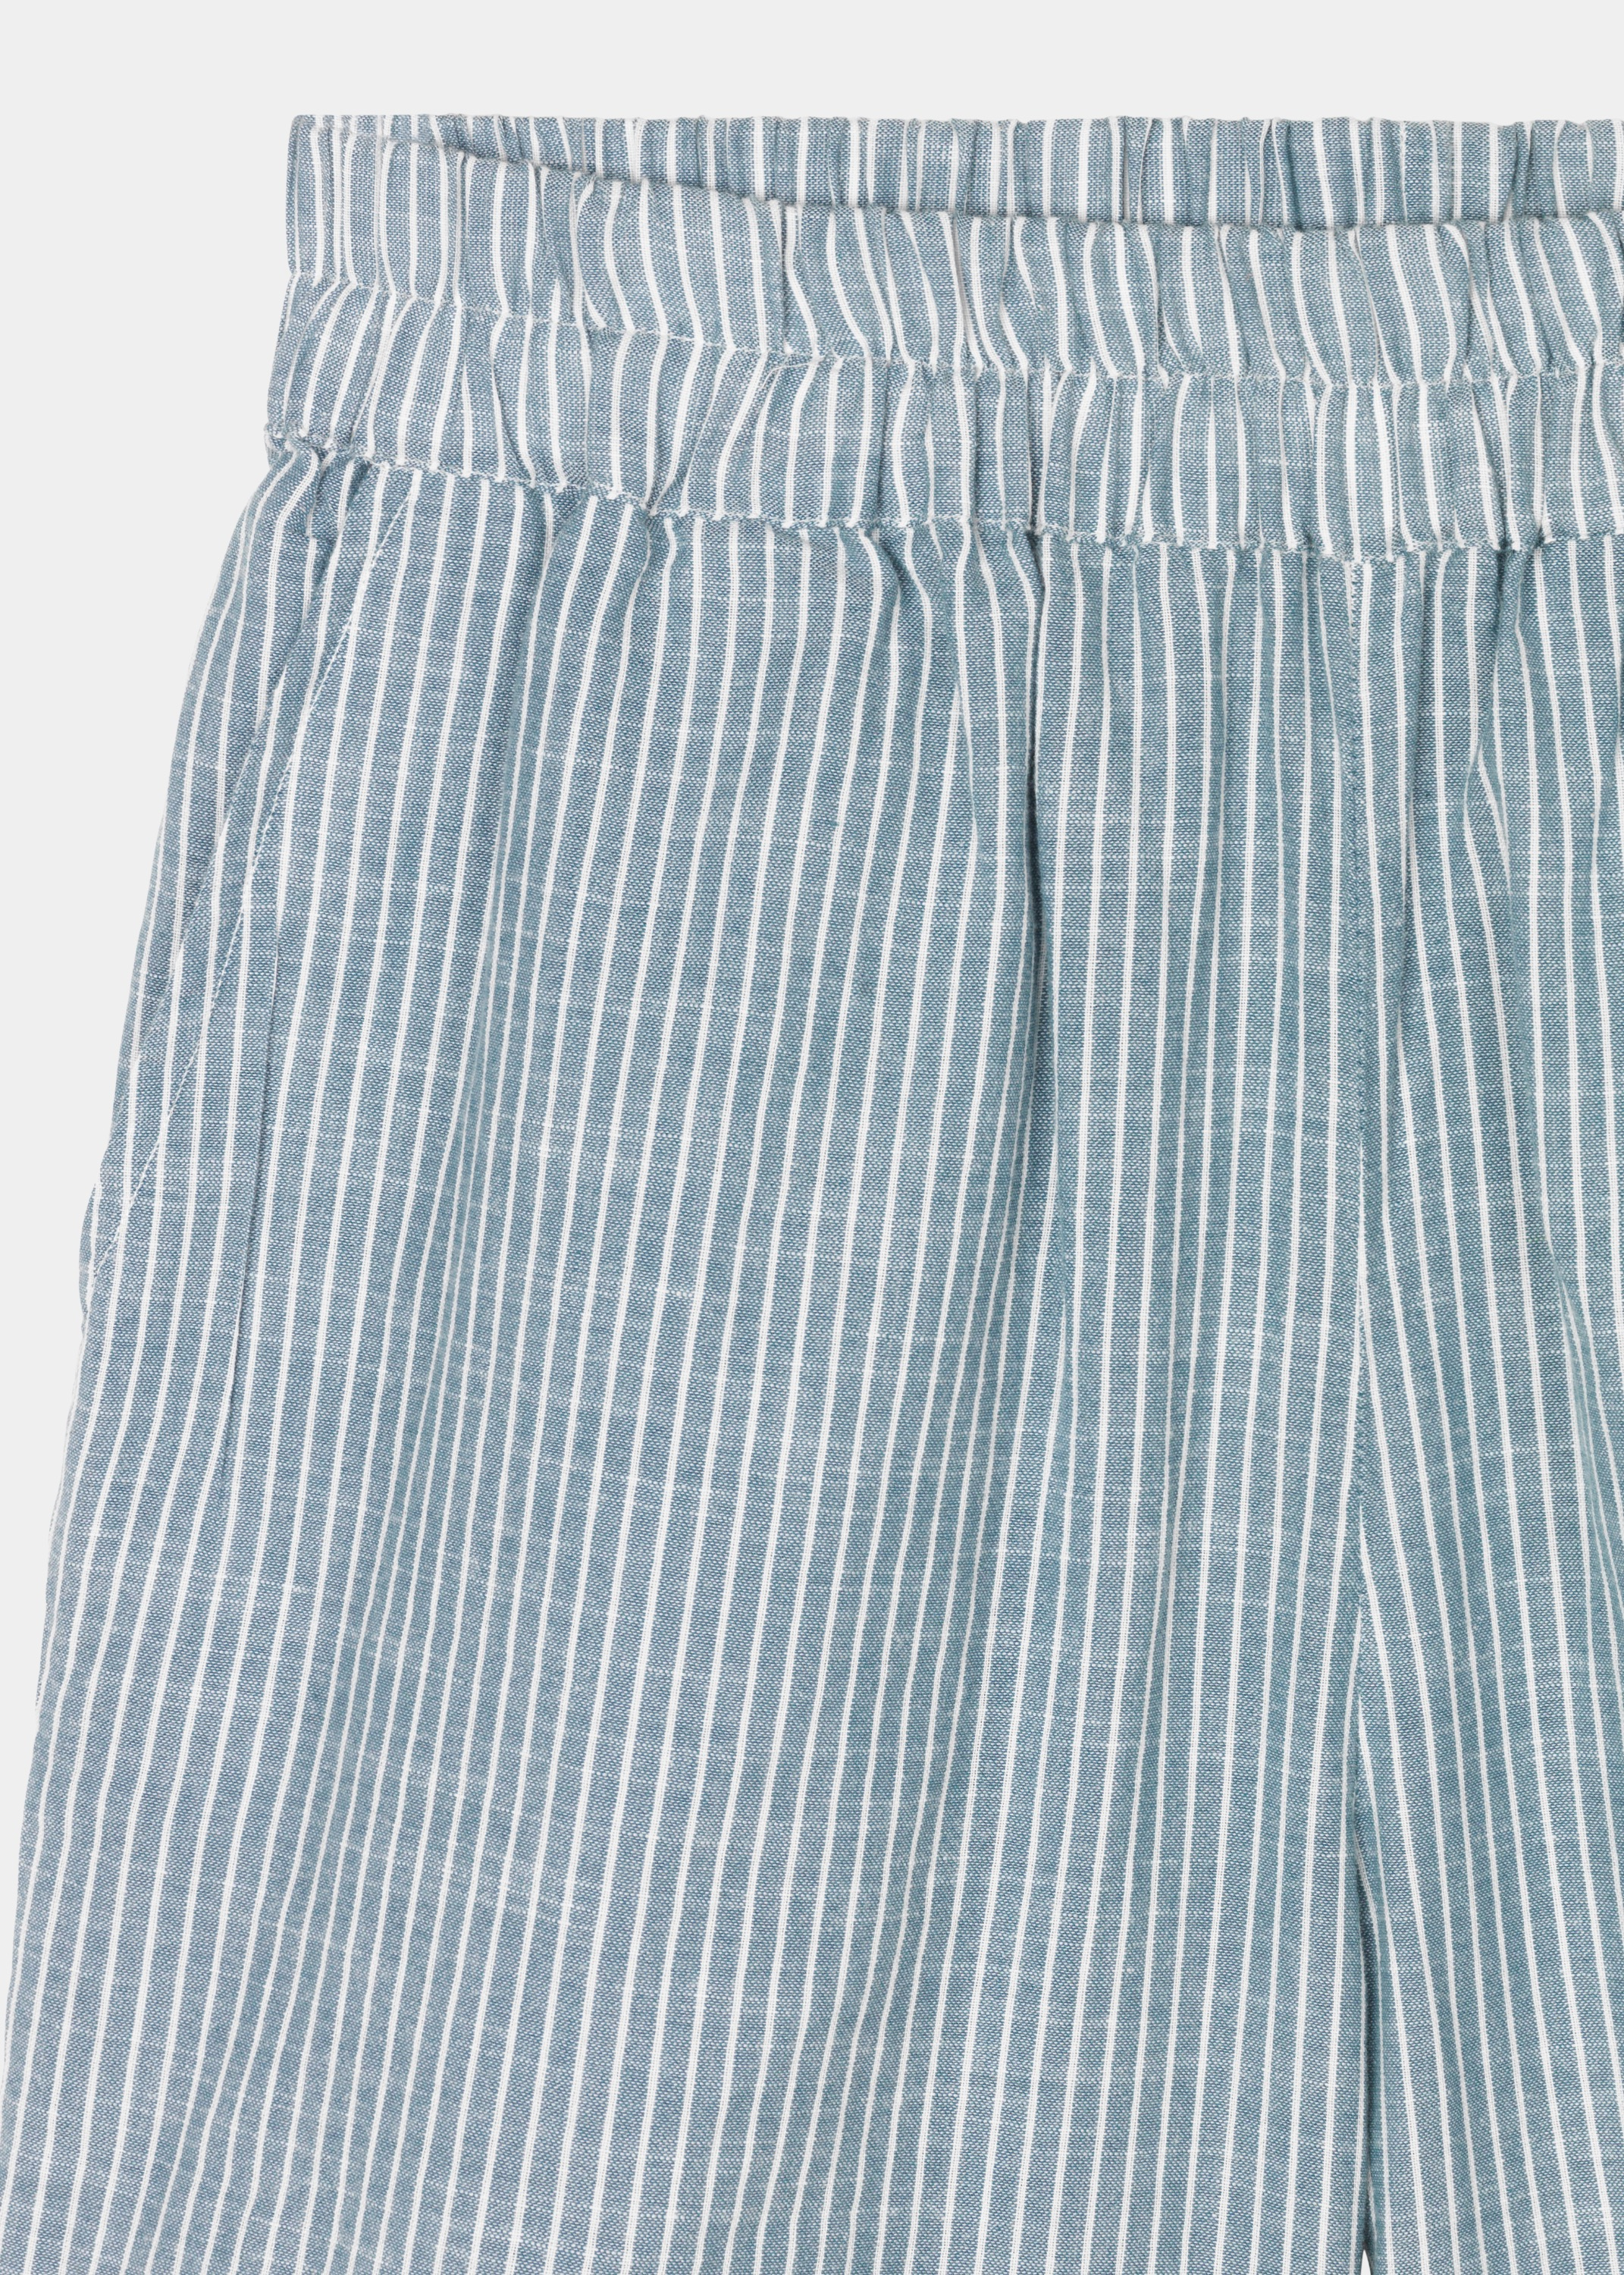 Hosen & Shorts - Shorts Long Striped